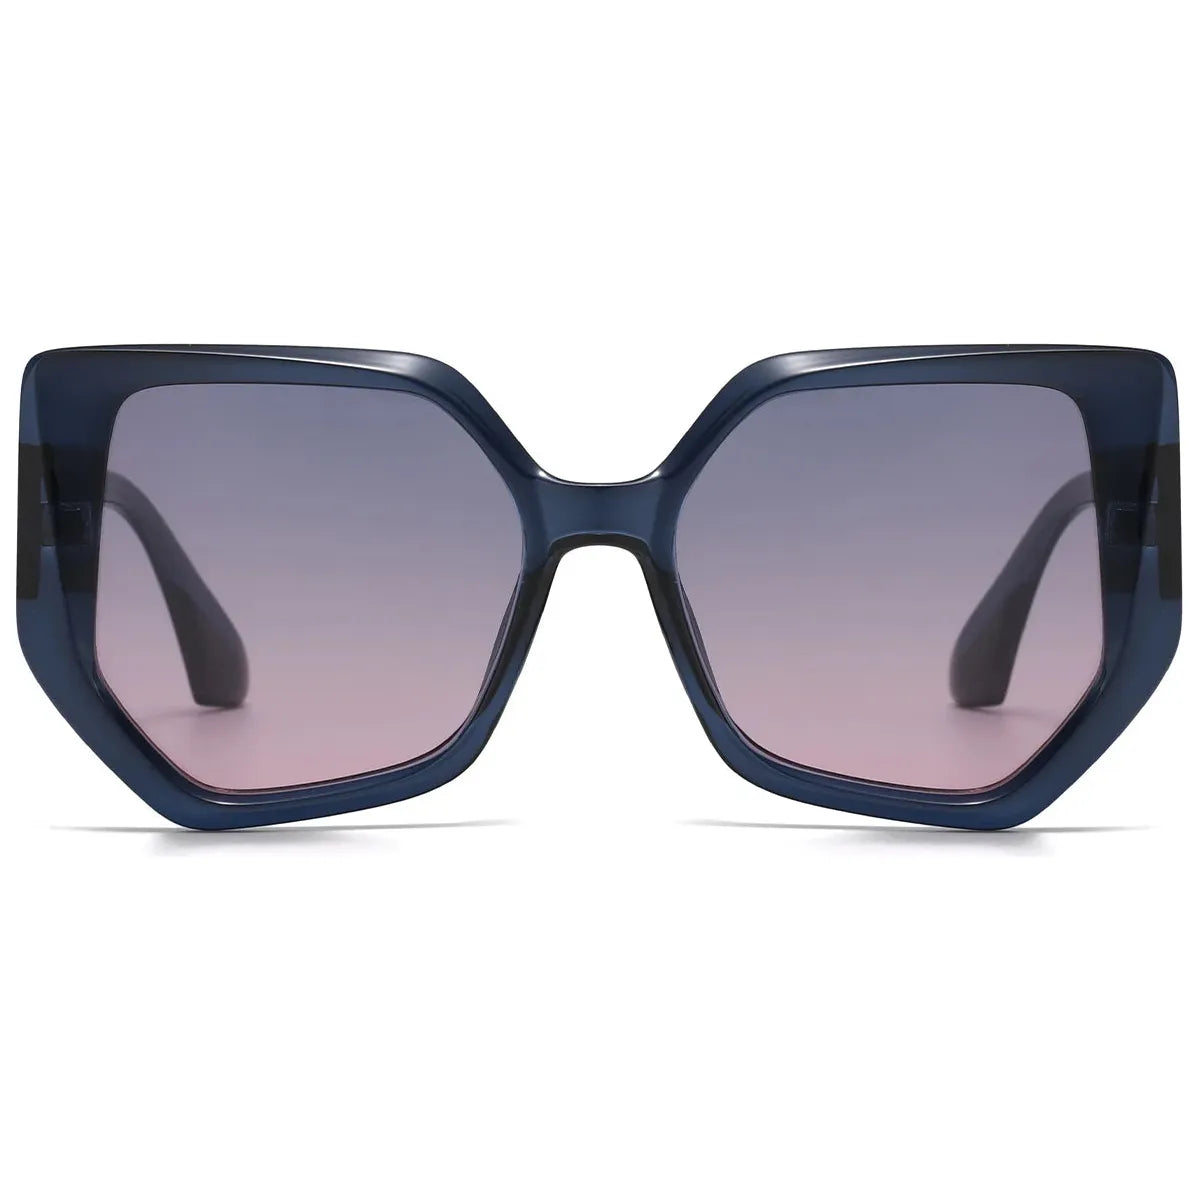 Candye Geometric Sunglasses SG4619 